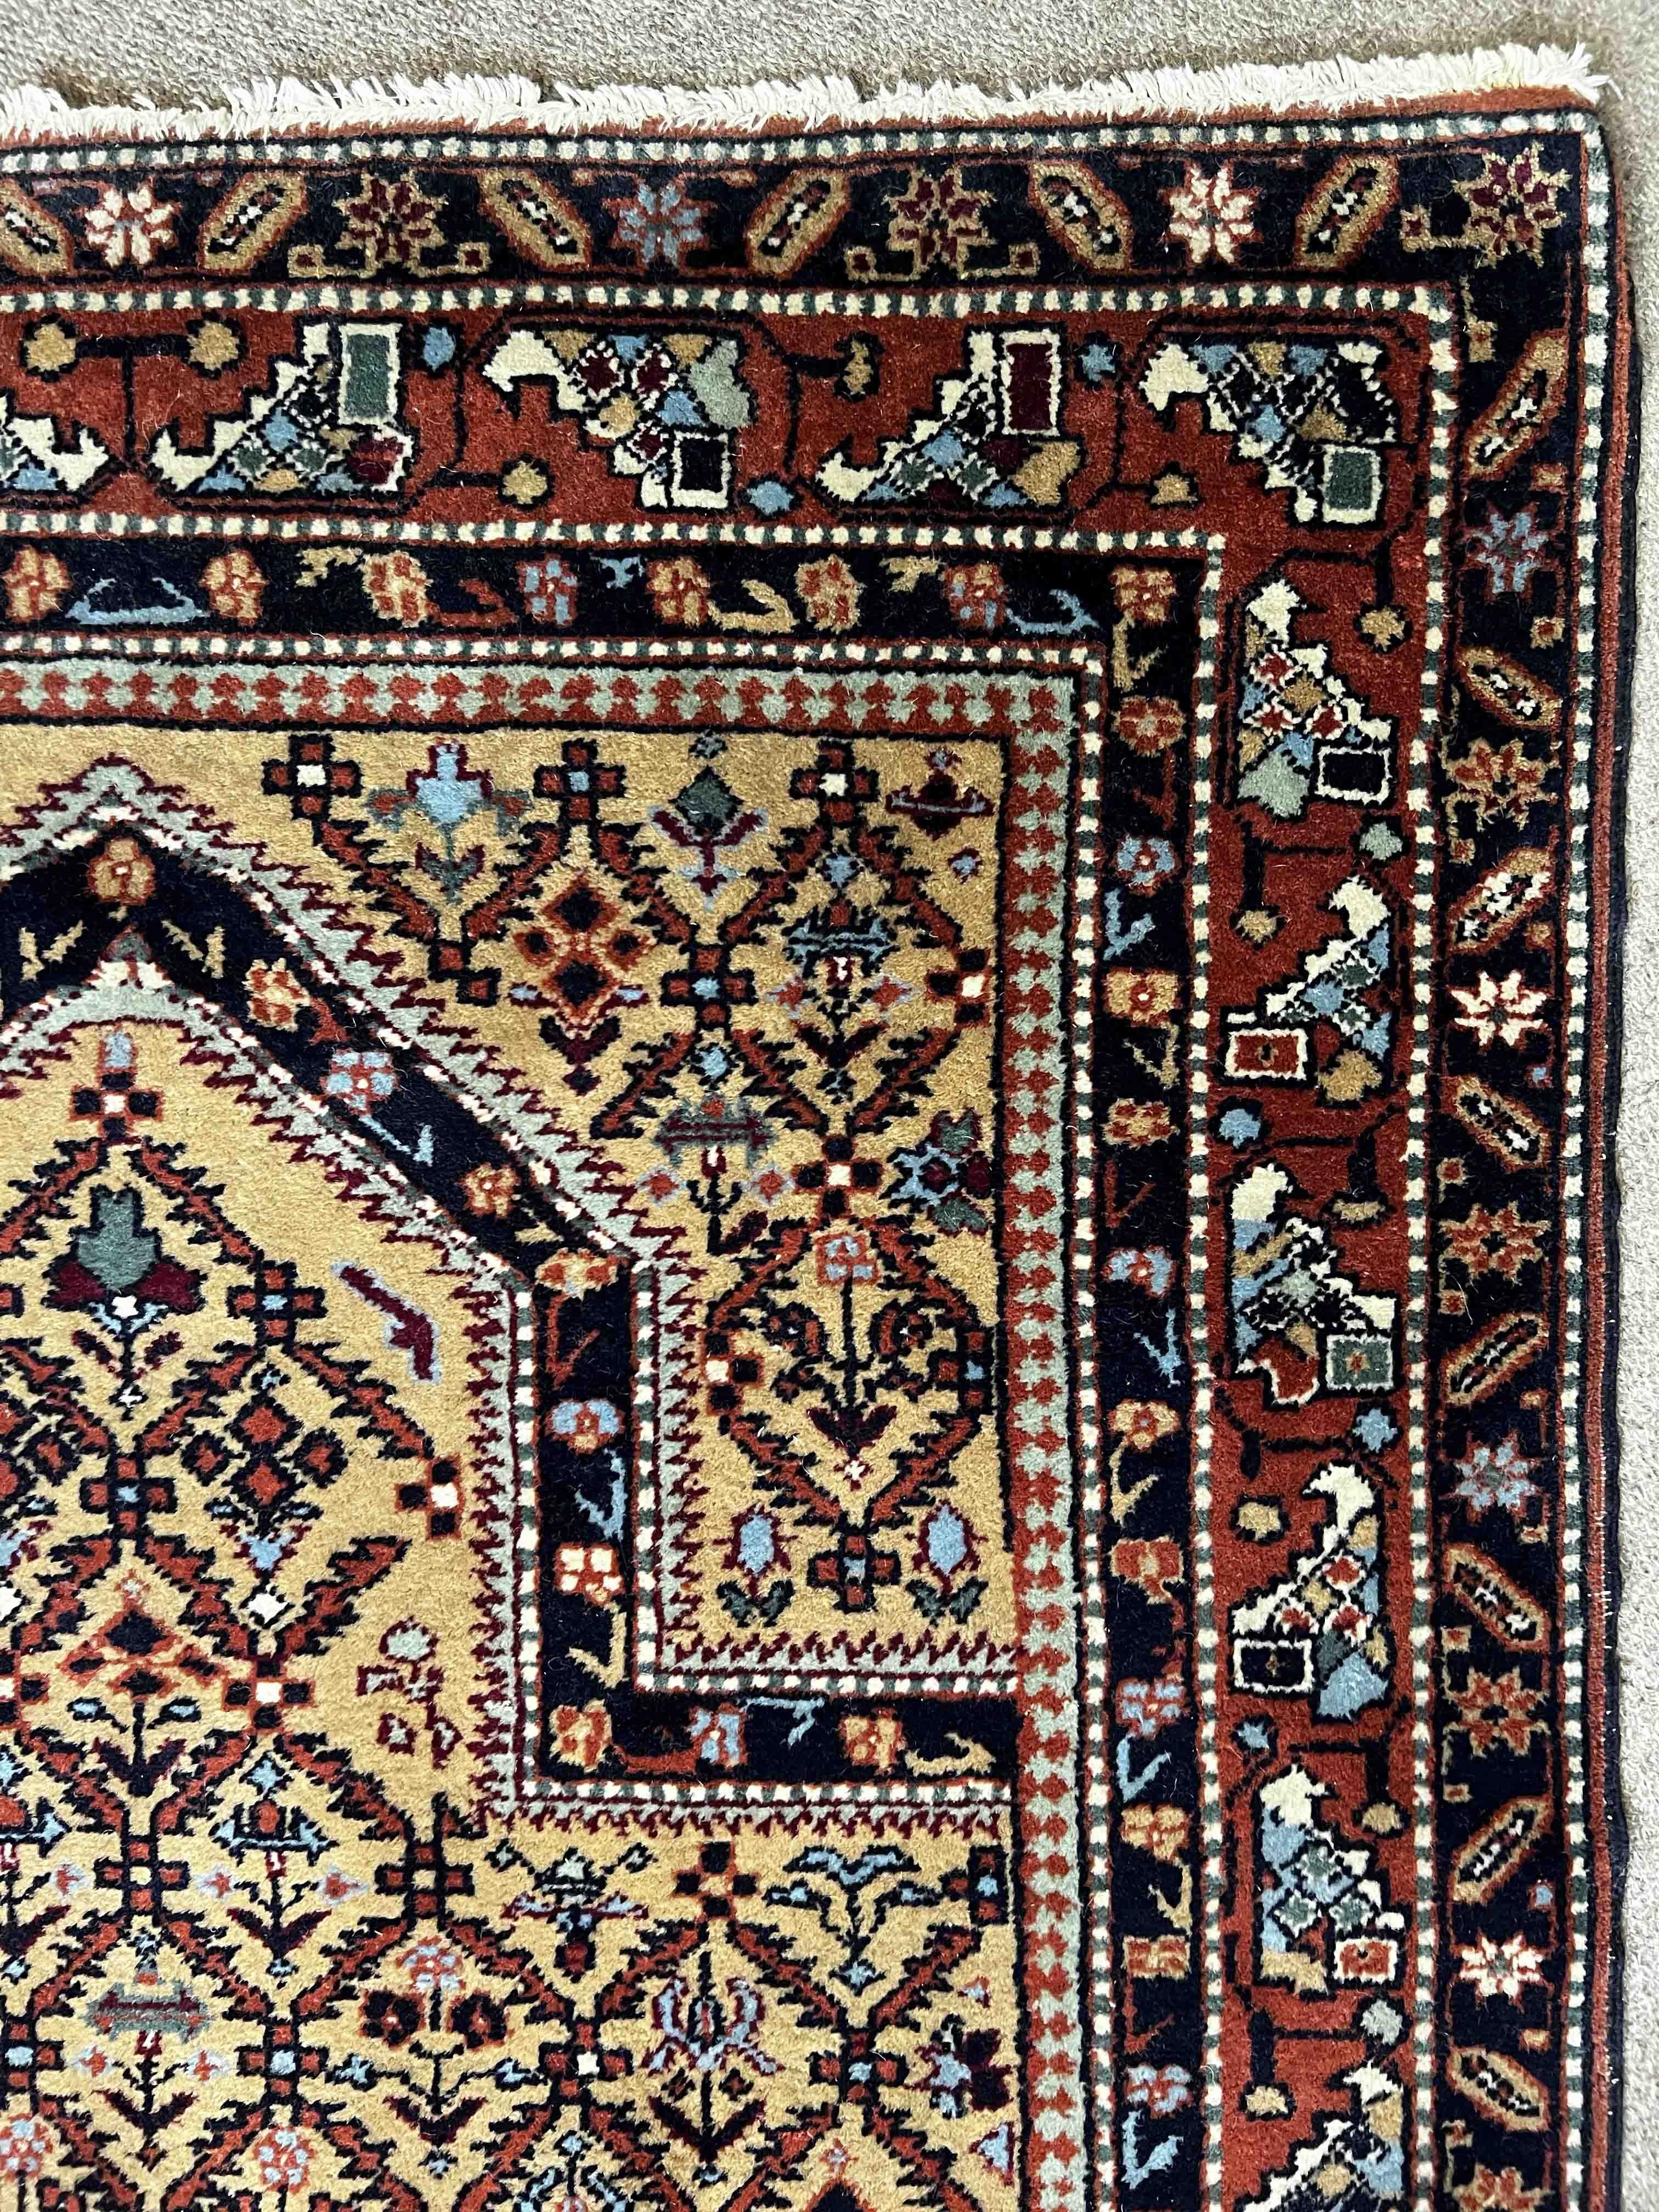  Caucasian Chirvan Carpet, 19th Century - N° 730 In Excellent Condition For Sale In Paris, FR